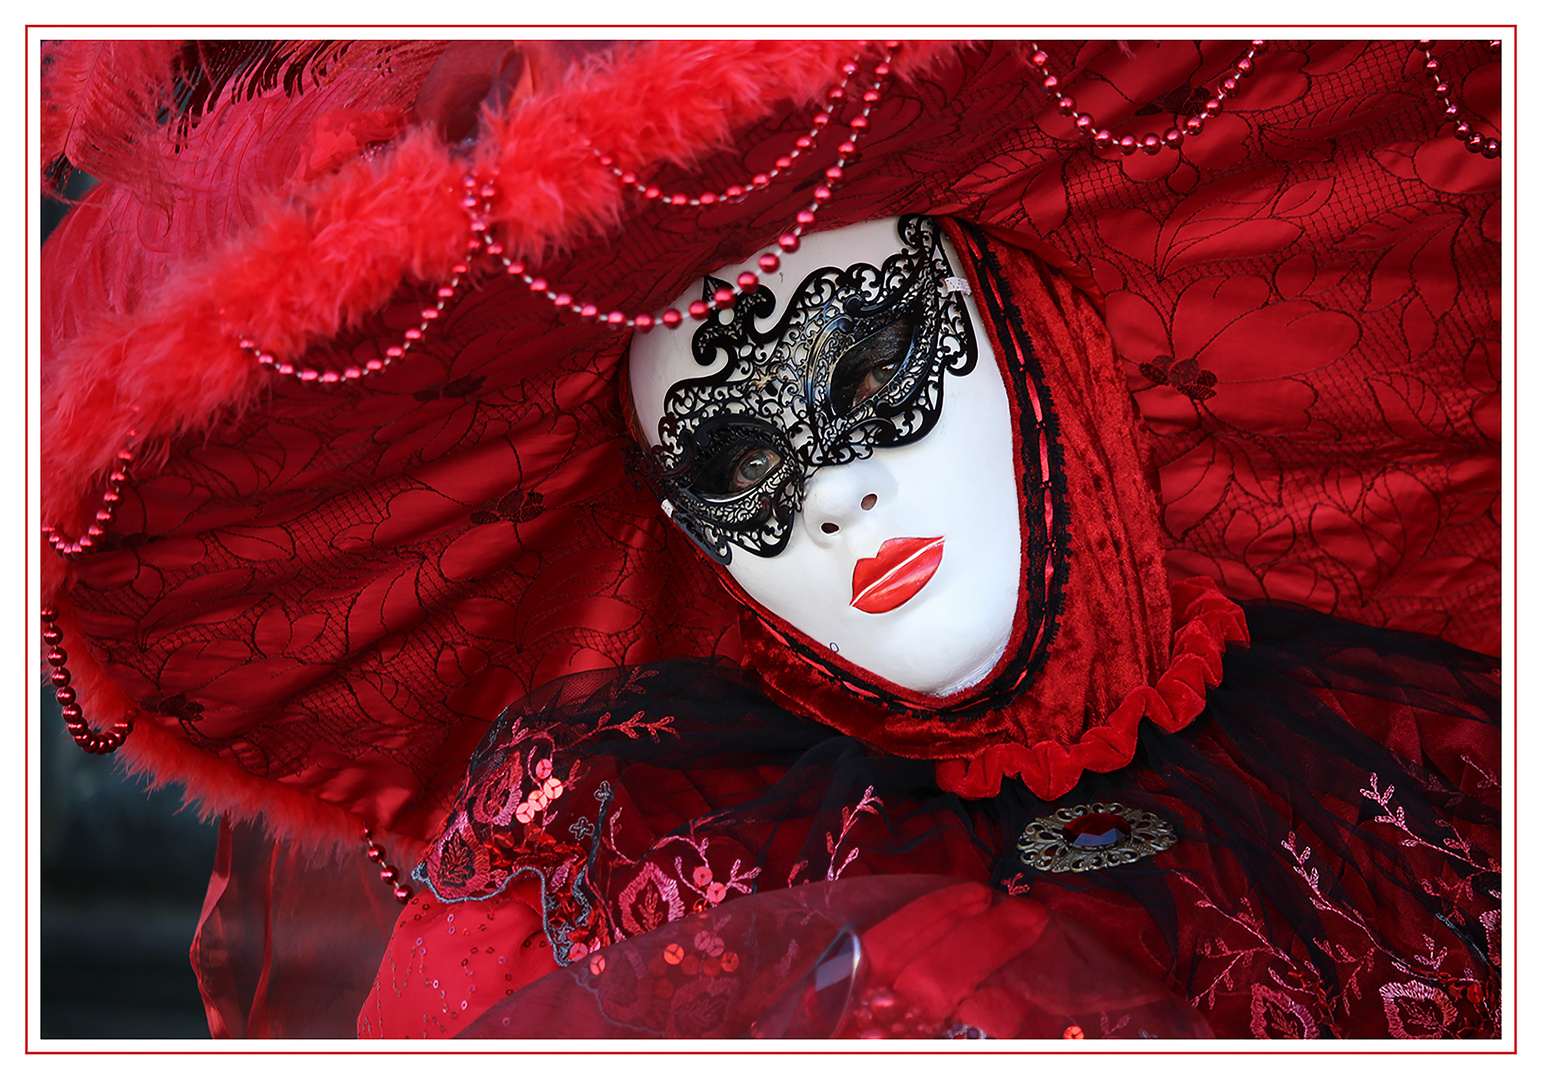 -| Carnevale die Venezia am 04.02.16 |-